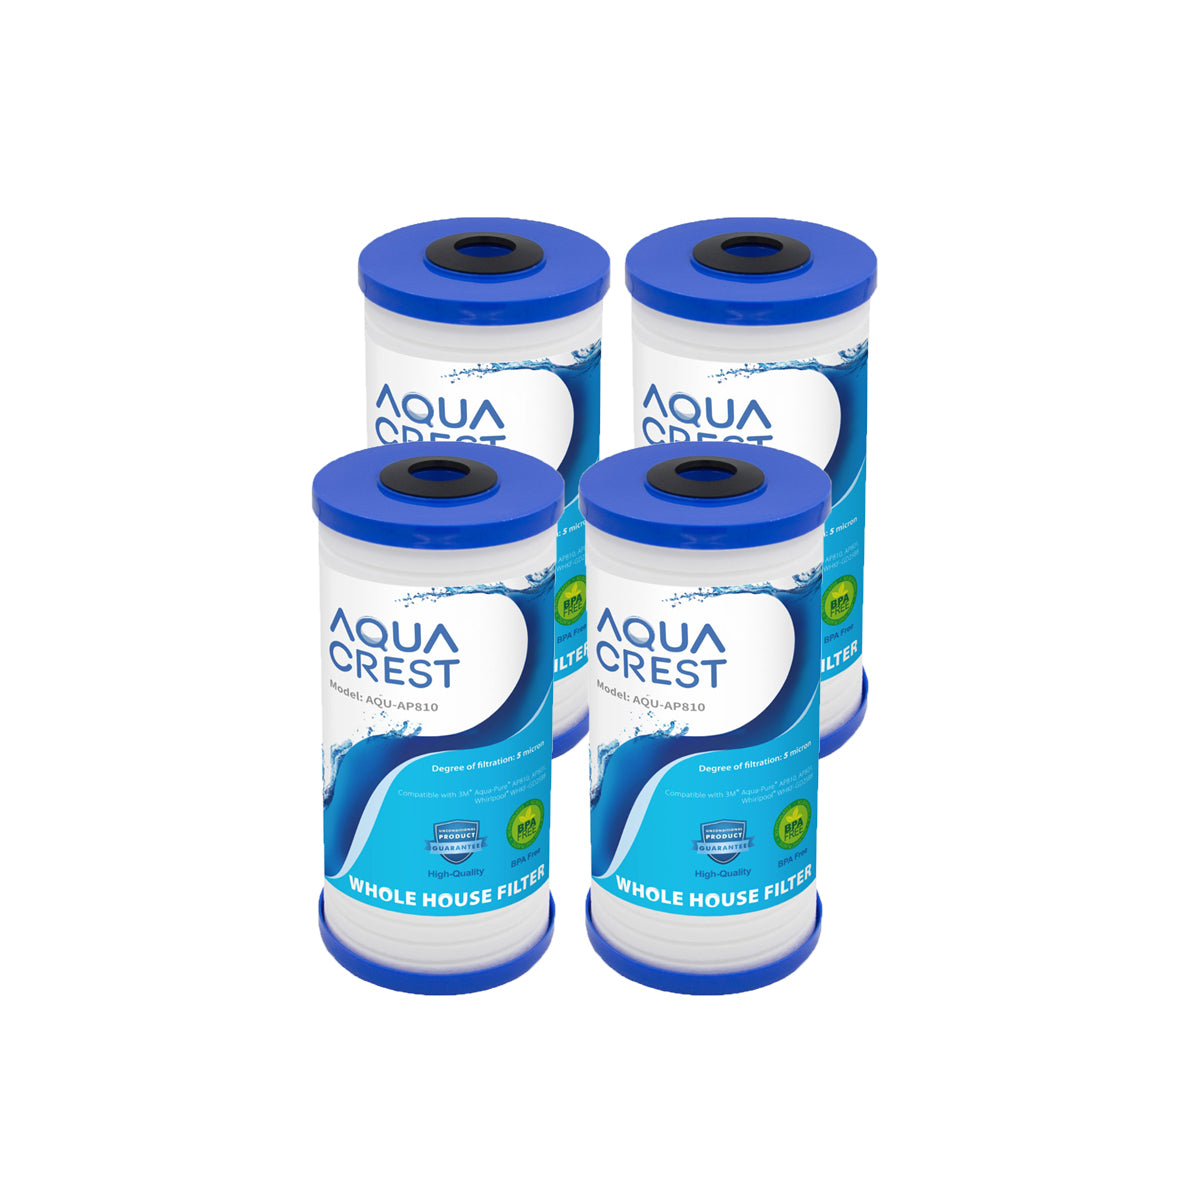 3 Packs AQUA CREST AP431 Water Filter eplacement for 3M Aqua-Pure AP431,  HF8-S